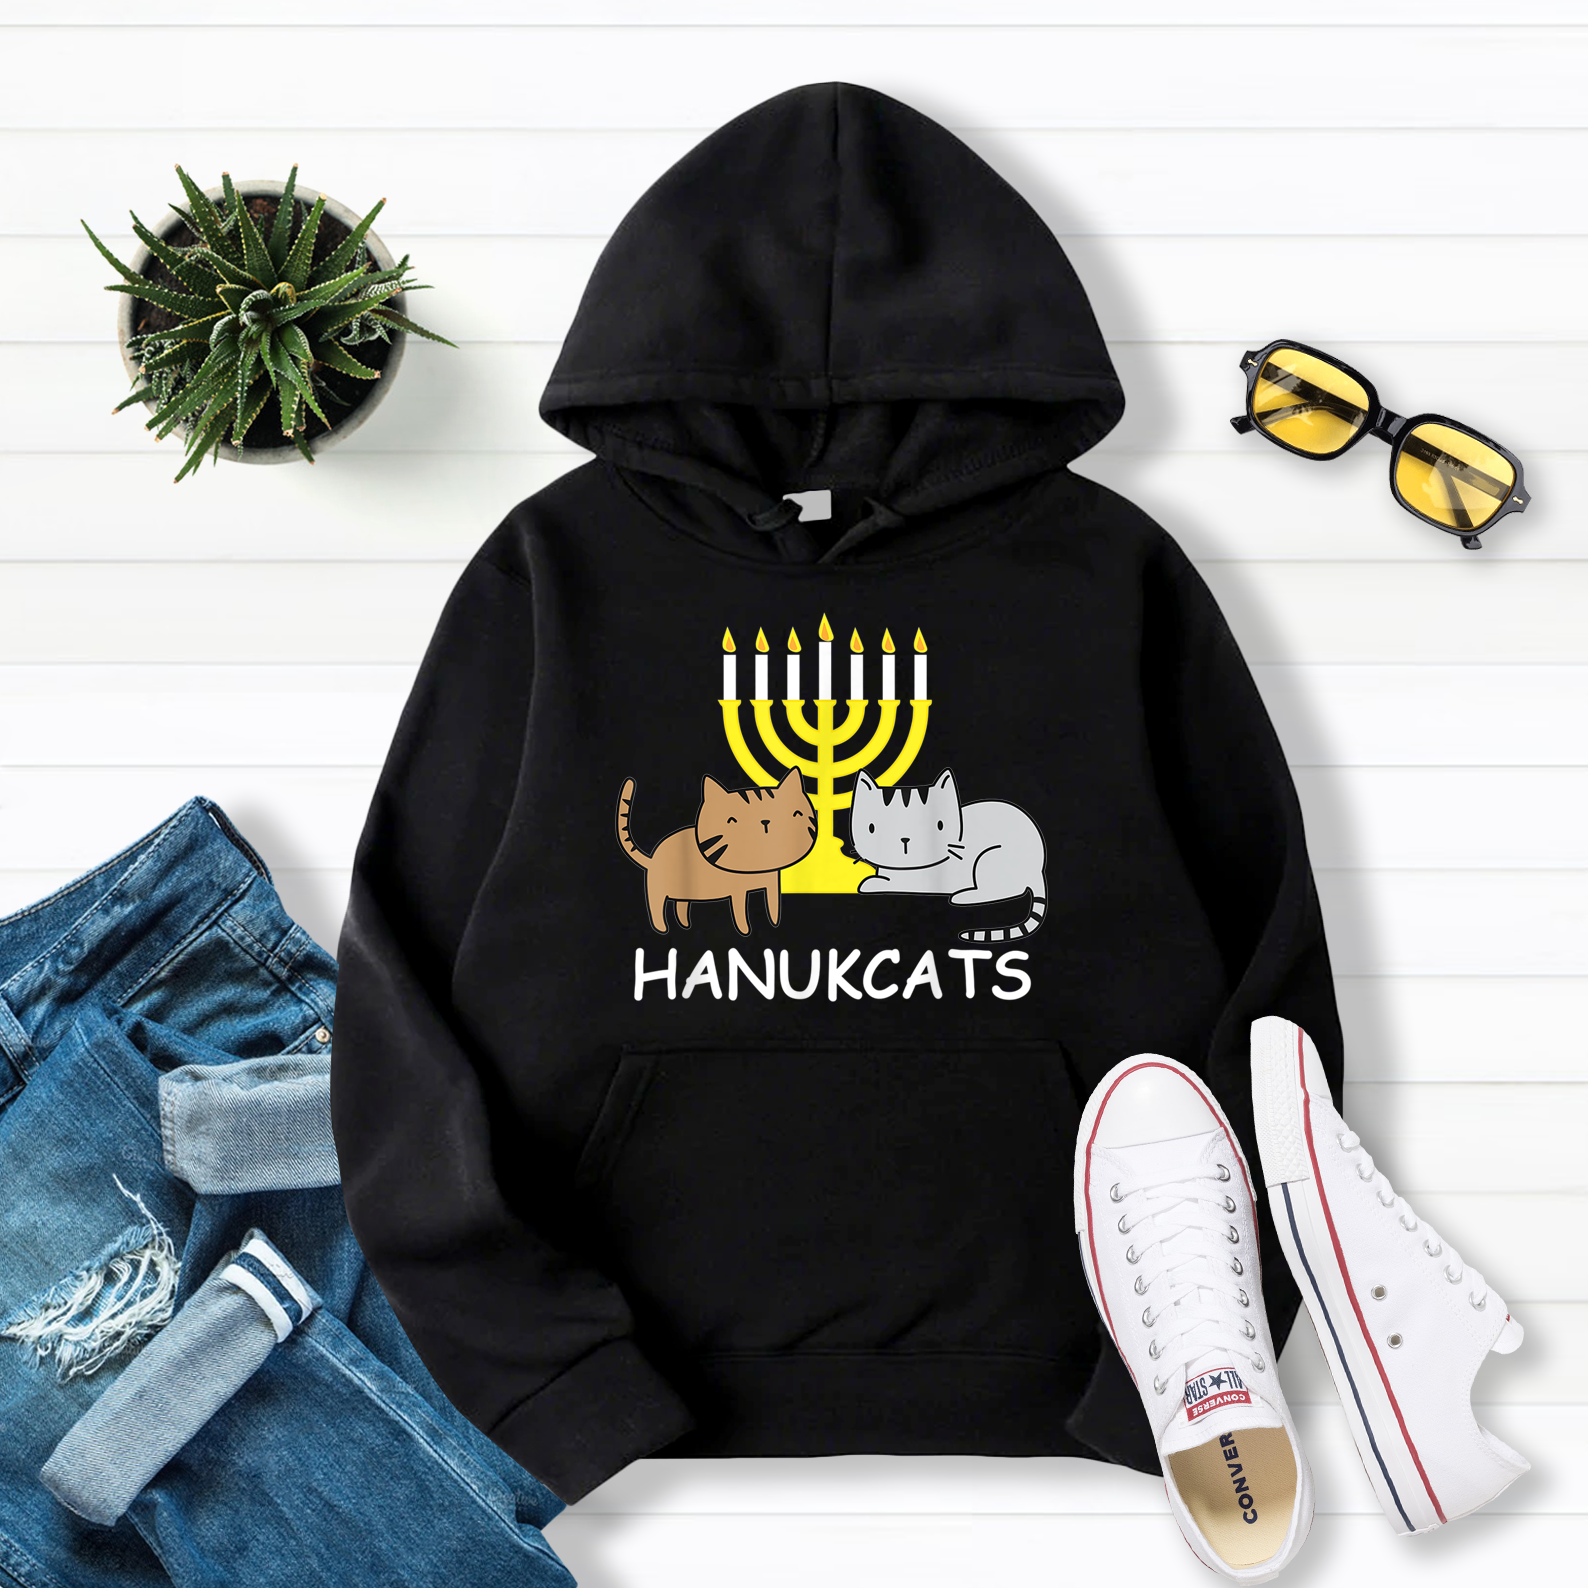 Hanukcats Funny Hanukkah Gift Cute Kawaii Cat Pullover Hoodie Black S-5XL